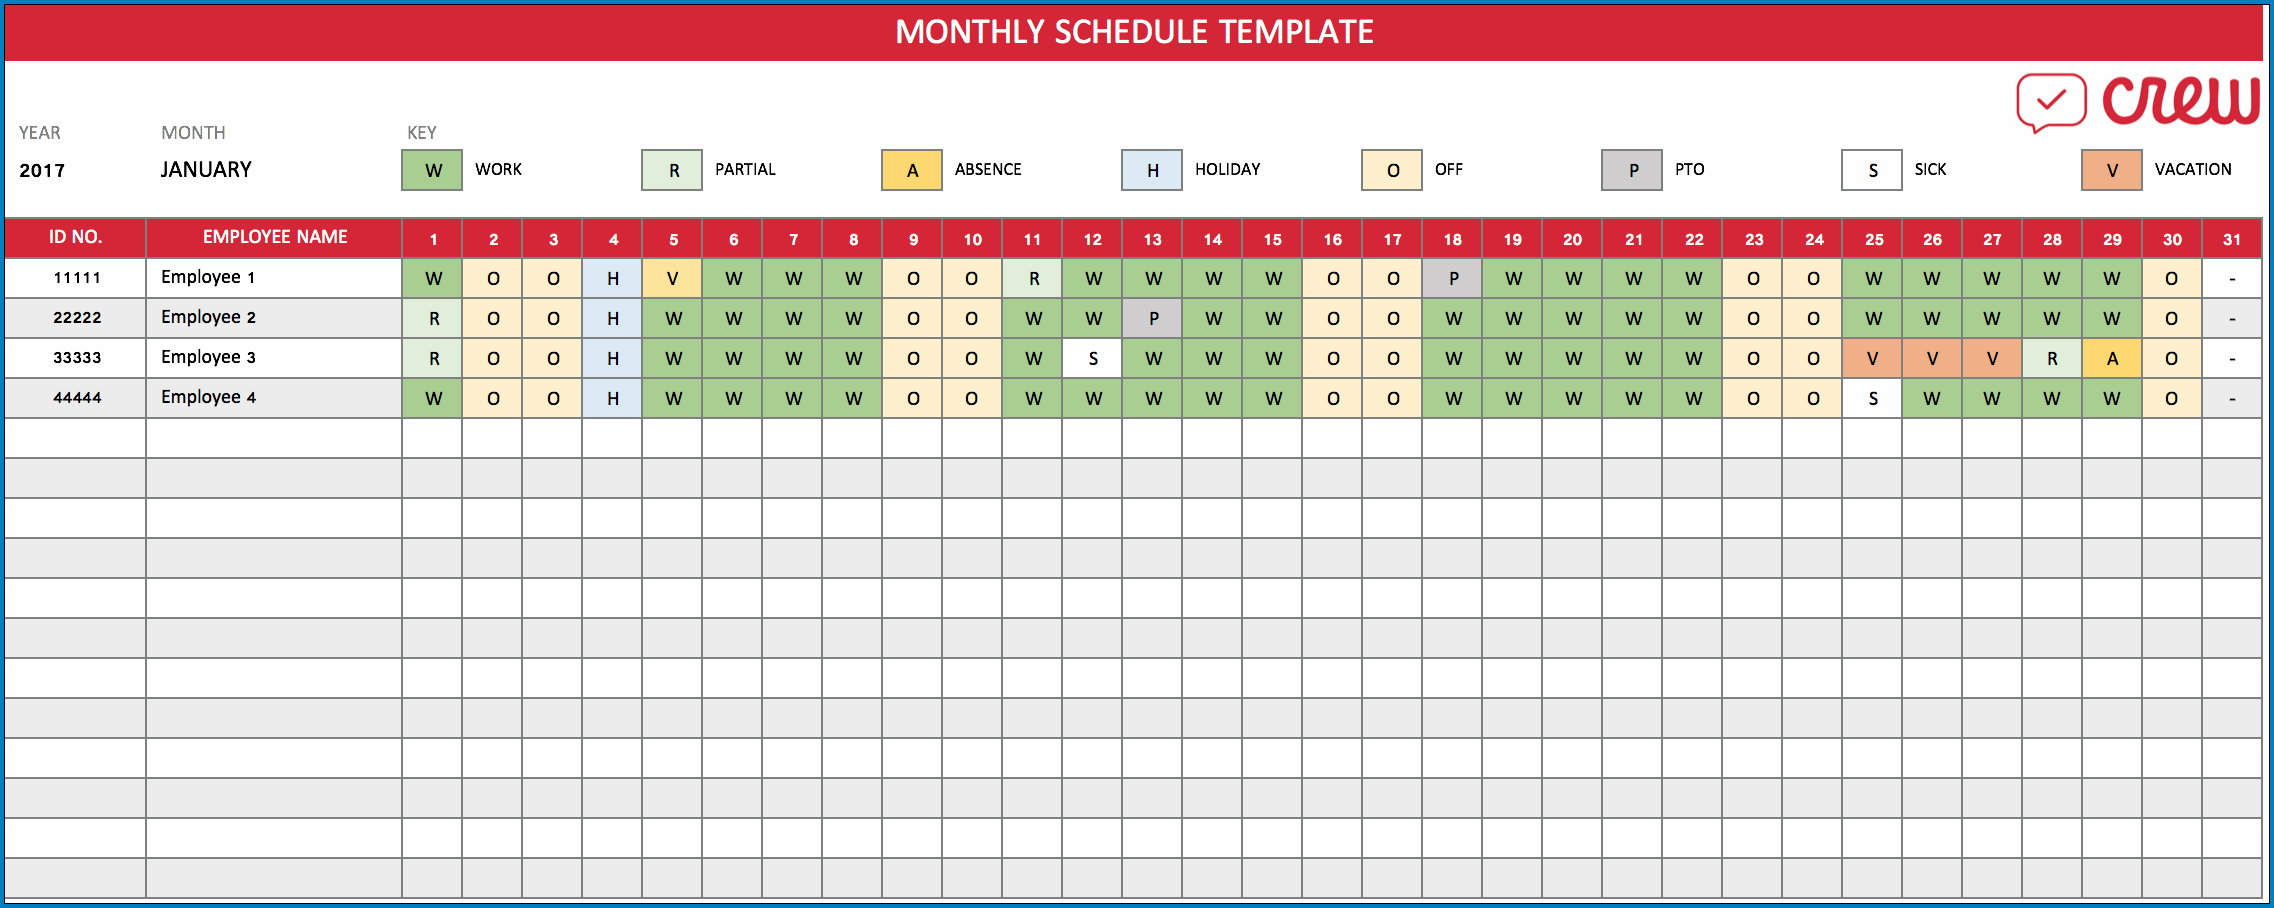 Monthly Employee Schedule Template Example